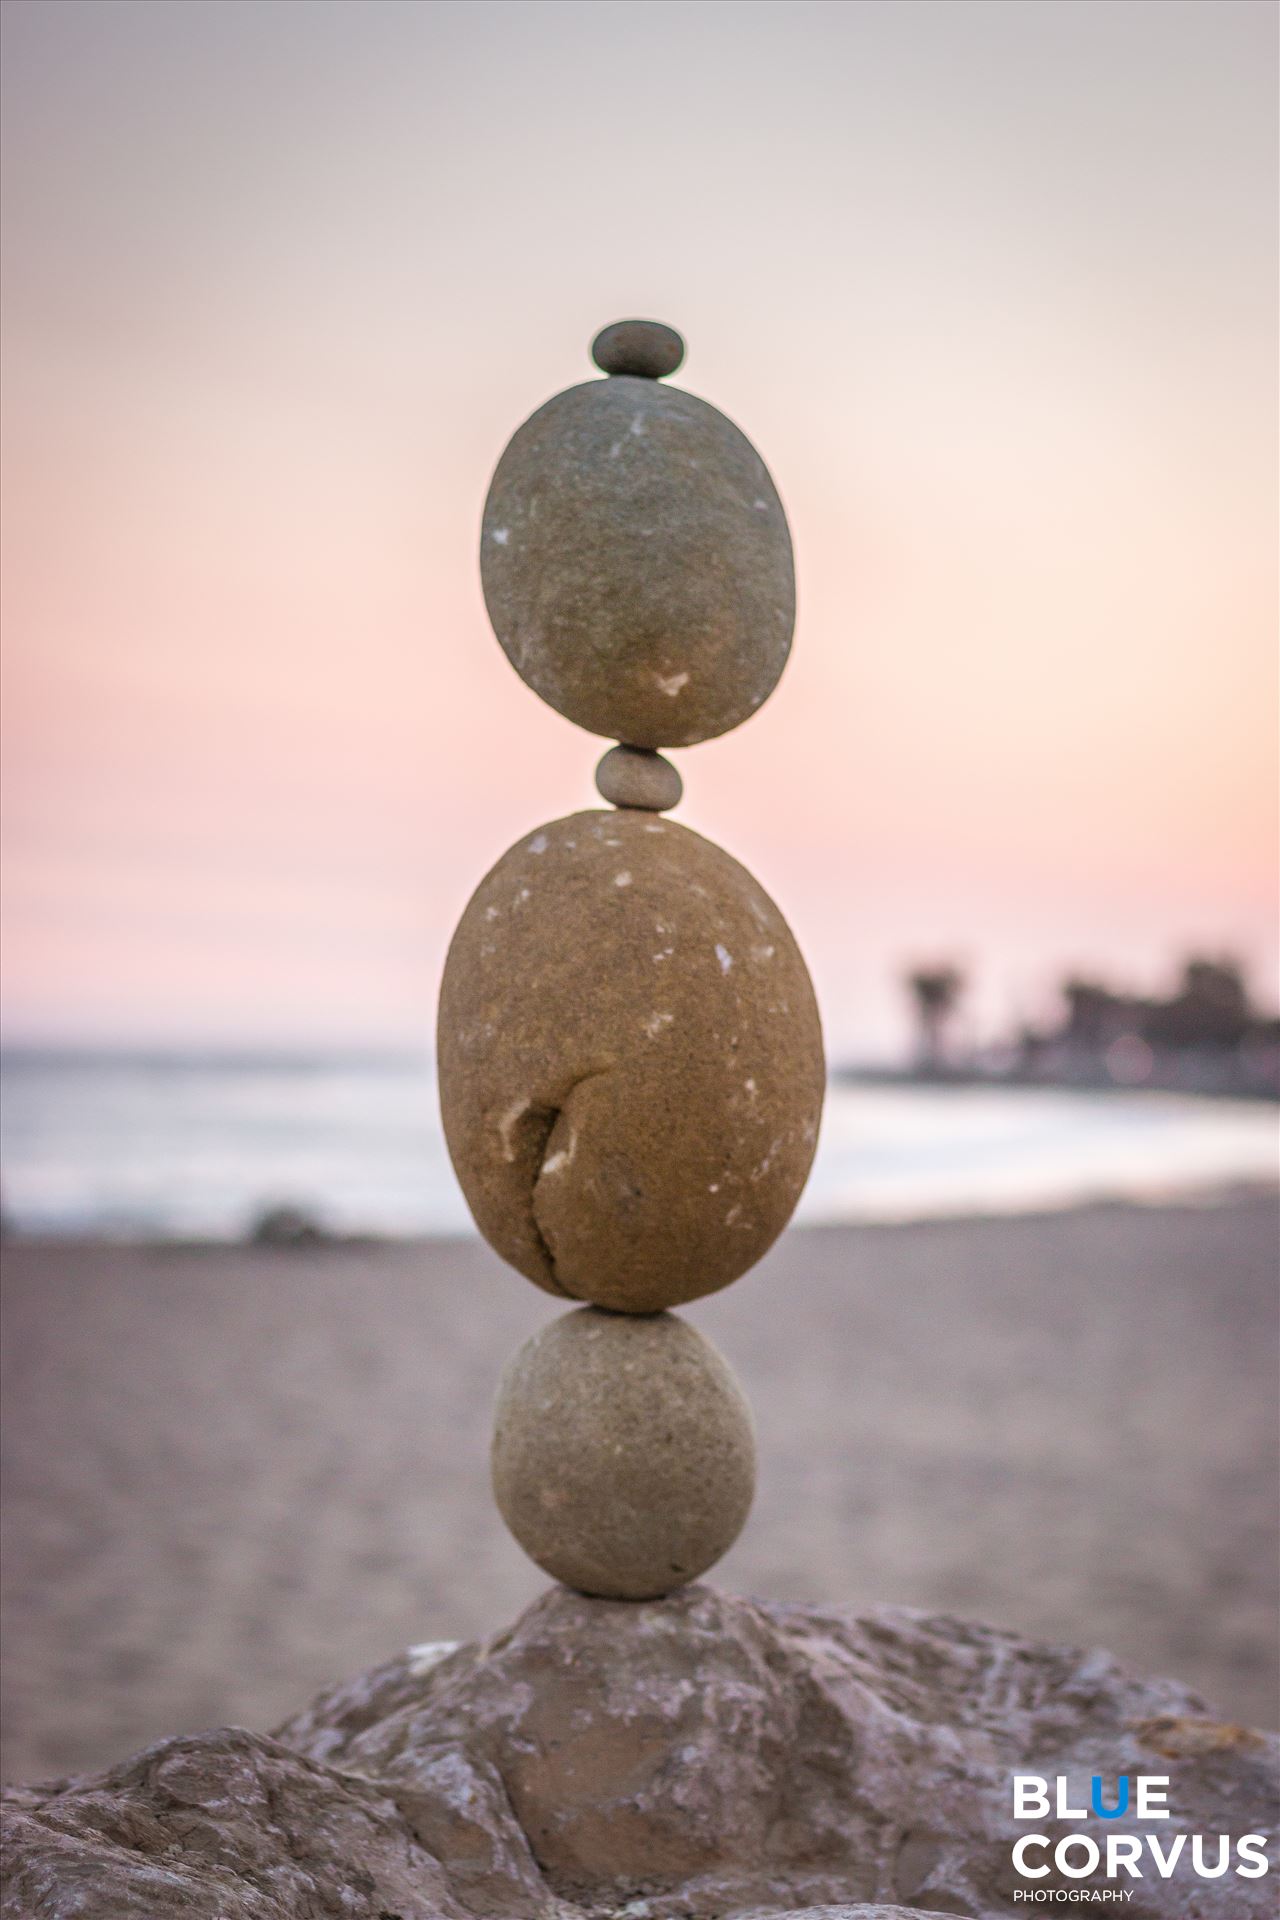 Creating Balance Location: Ventura, California by Eddie Zamora